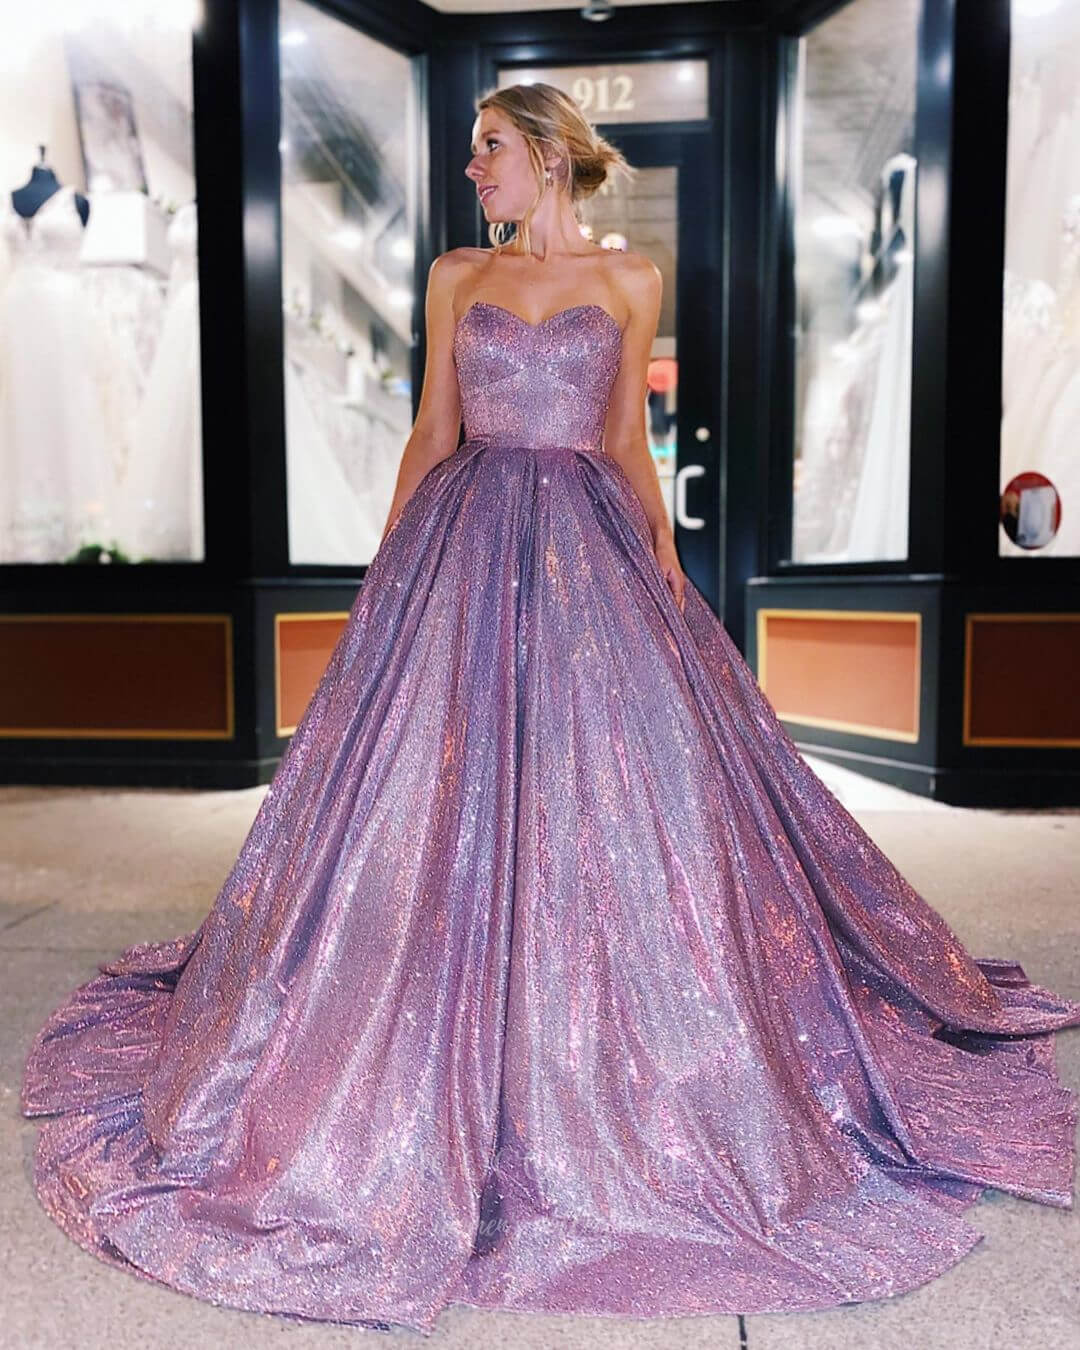 vigocouture-Lavender Sparkly Lace Strapless A-Line Prom Dress 20819-Prom Dresses-vigocouture-Lavender-US2-